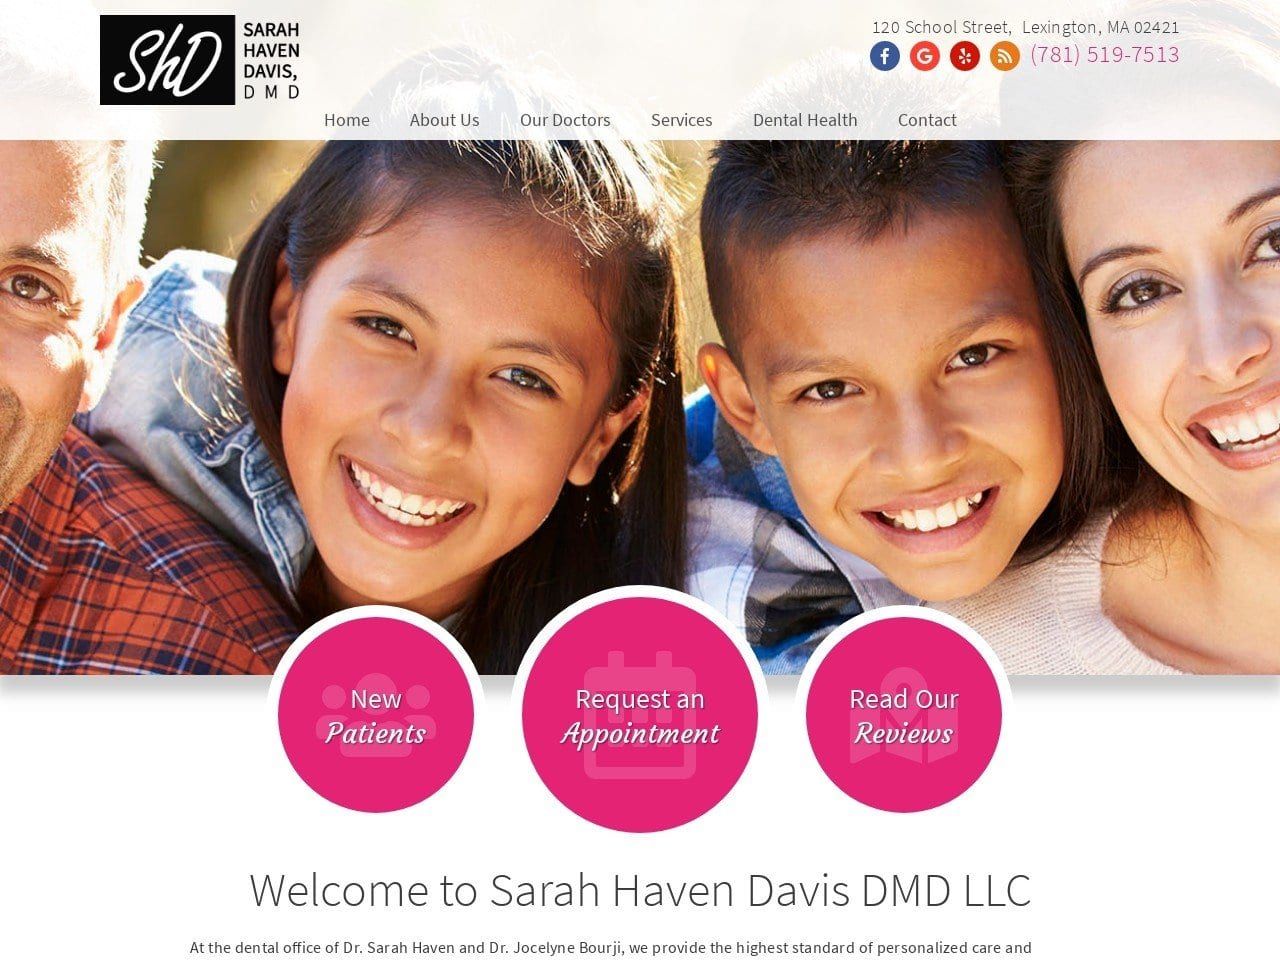 Sarah Haven Davis DMD LLC Website Screenshot from sarahdavisdmd.com